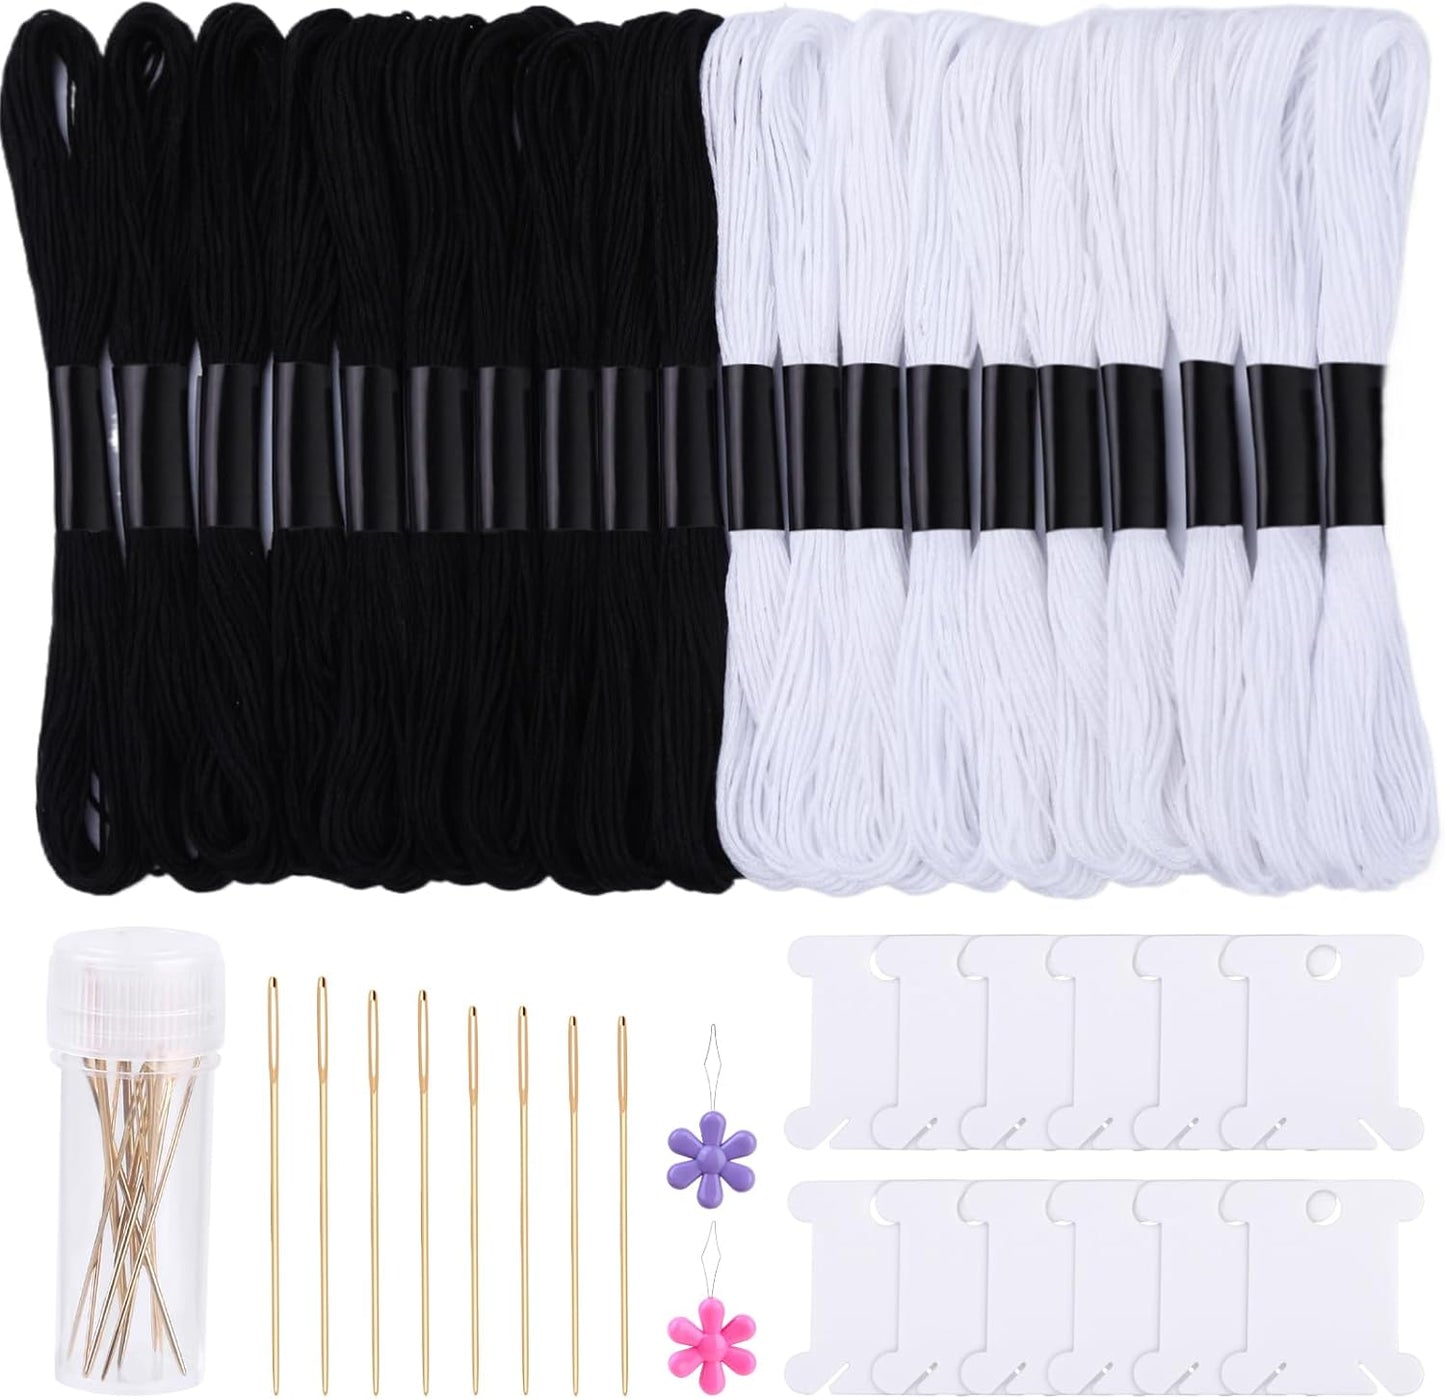 10 Skeins Black Embroidery Floss, 8M Cotton Embroidery Floss-Cross Stitch Thread, Embroidery Thread Floss Set, Stitch Threads Polyester Thread Friendship Bracelets Thread